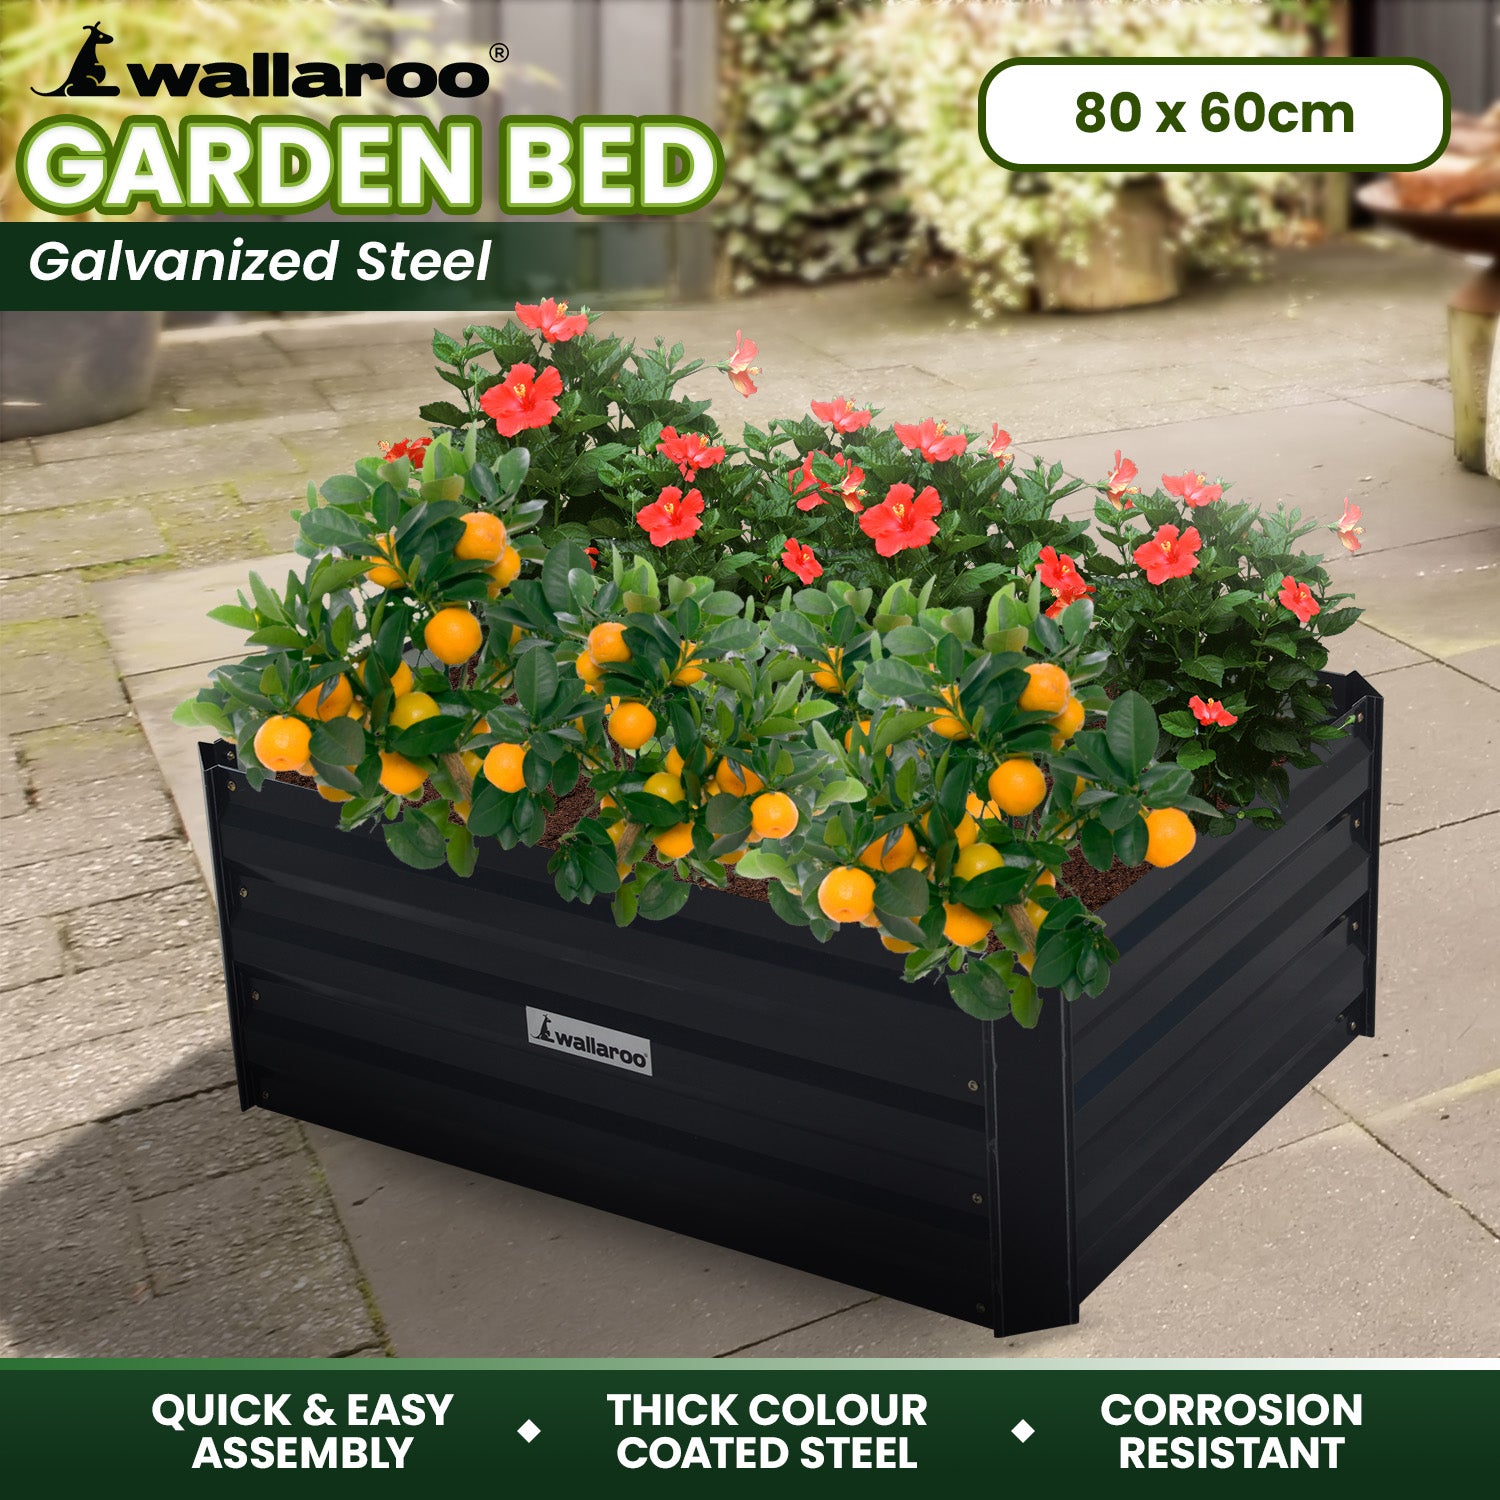 Wallaroo Garden Bed Galvanized Steel - Black 80 x 60 x 30cm